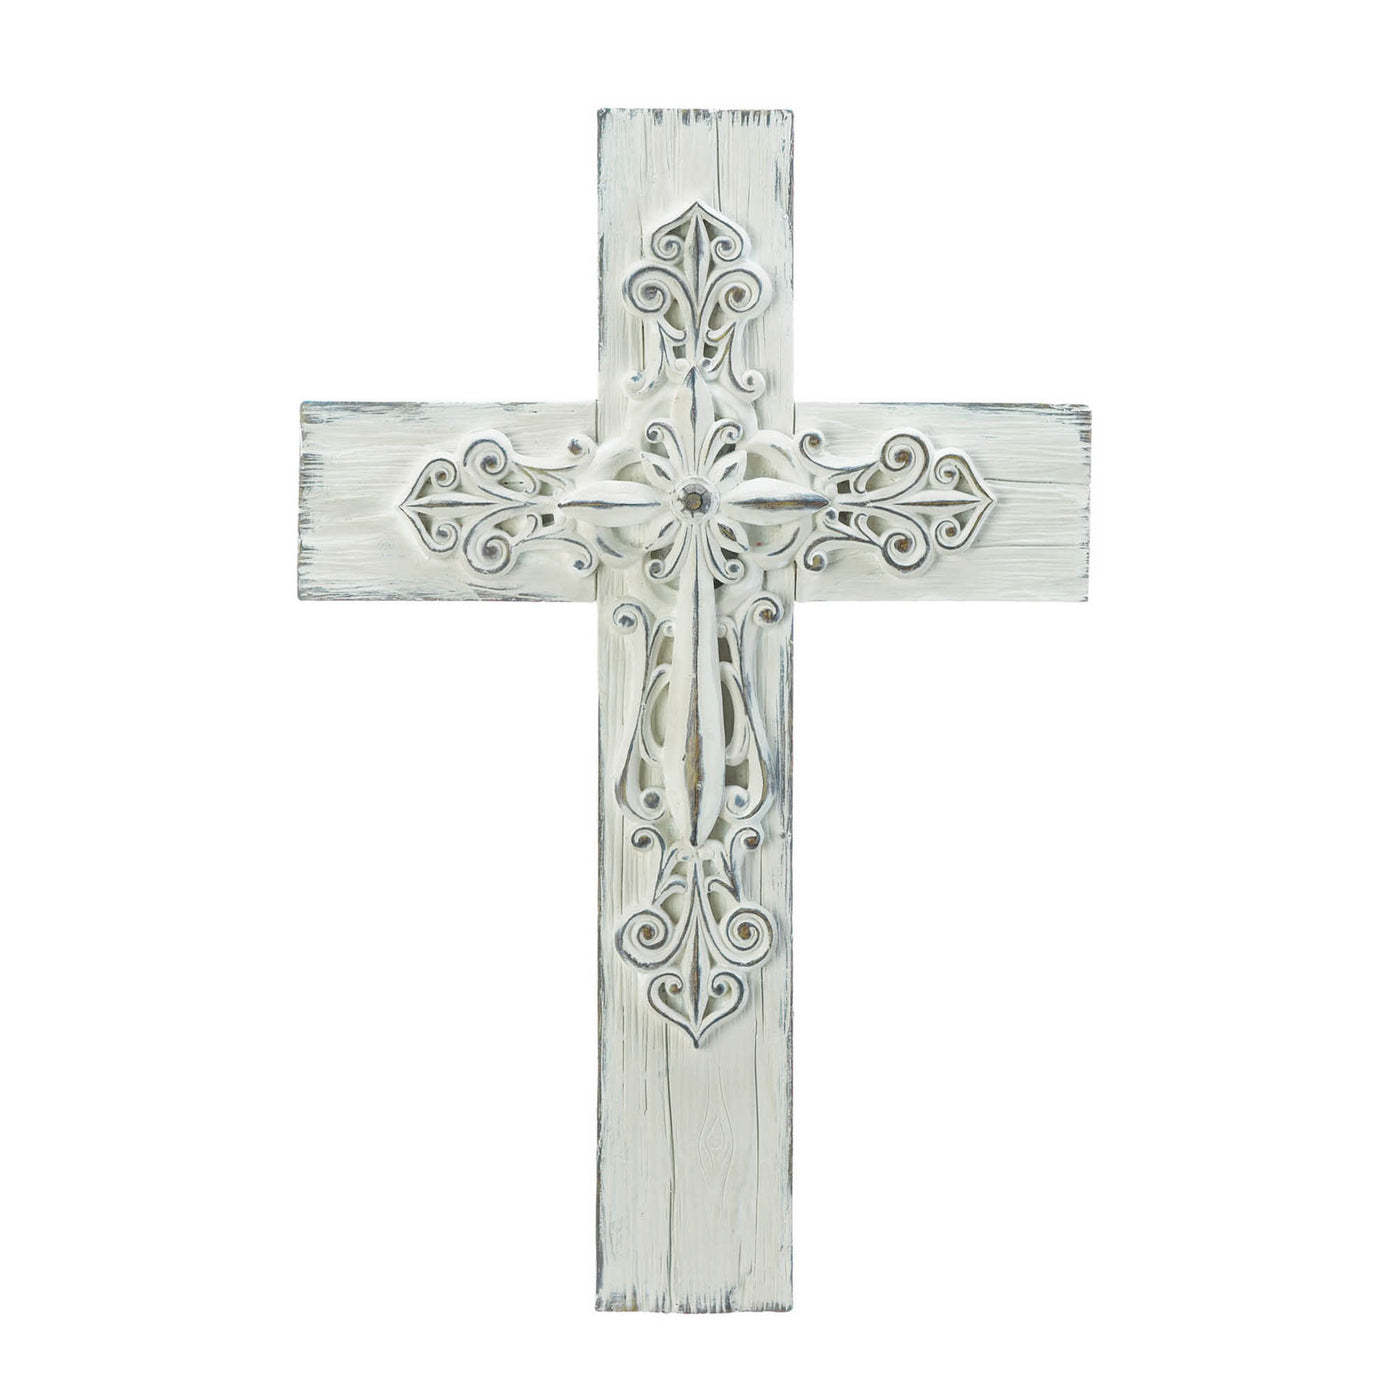 Ornate Whitewashed Cross - $34.93